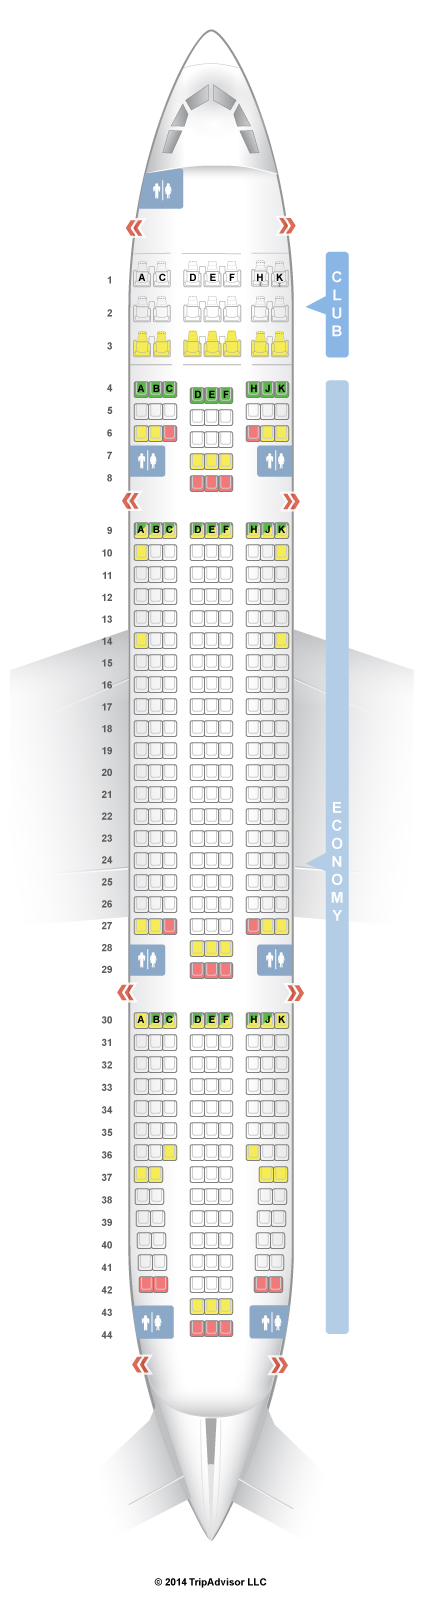 Airbus A310 Seating Chart Air Transat